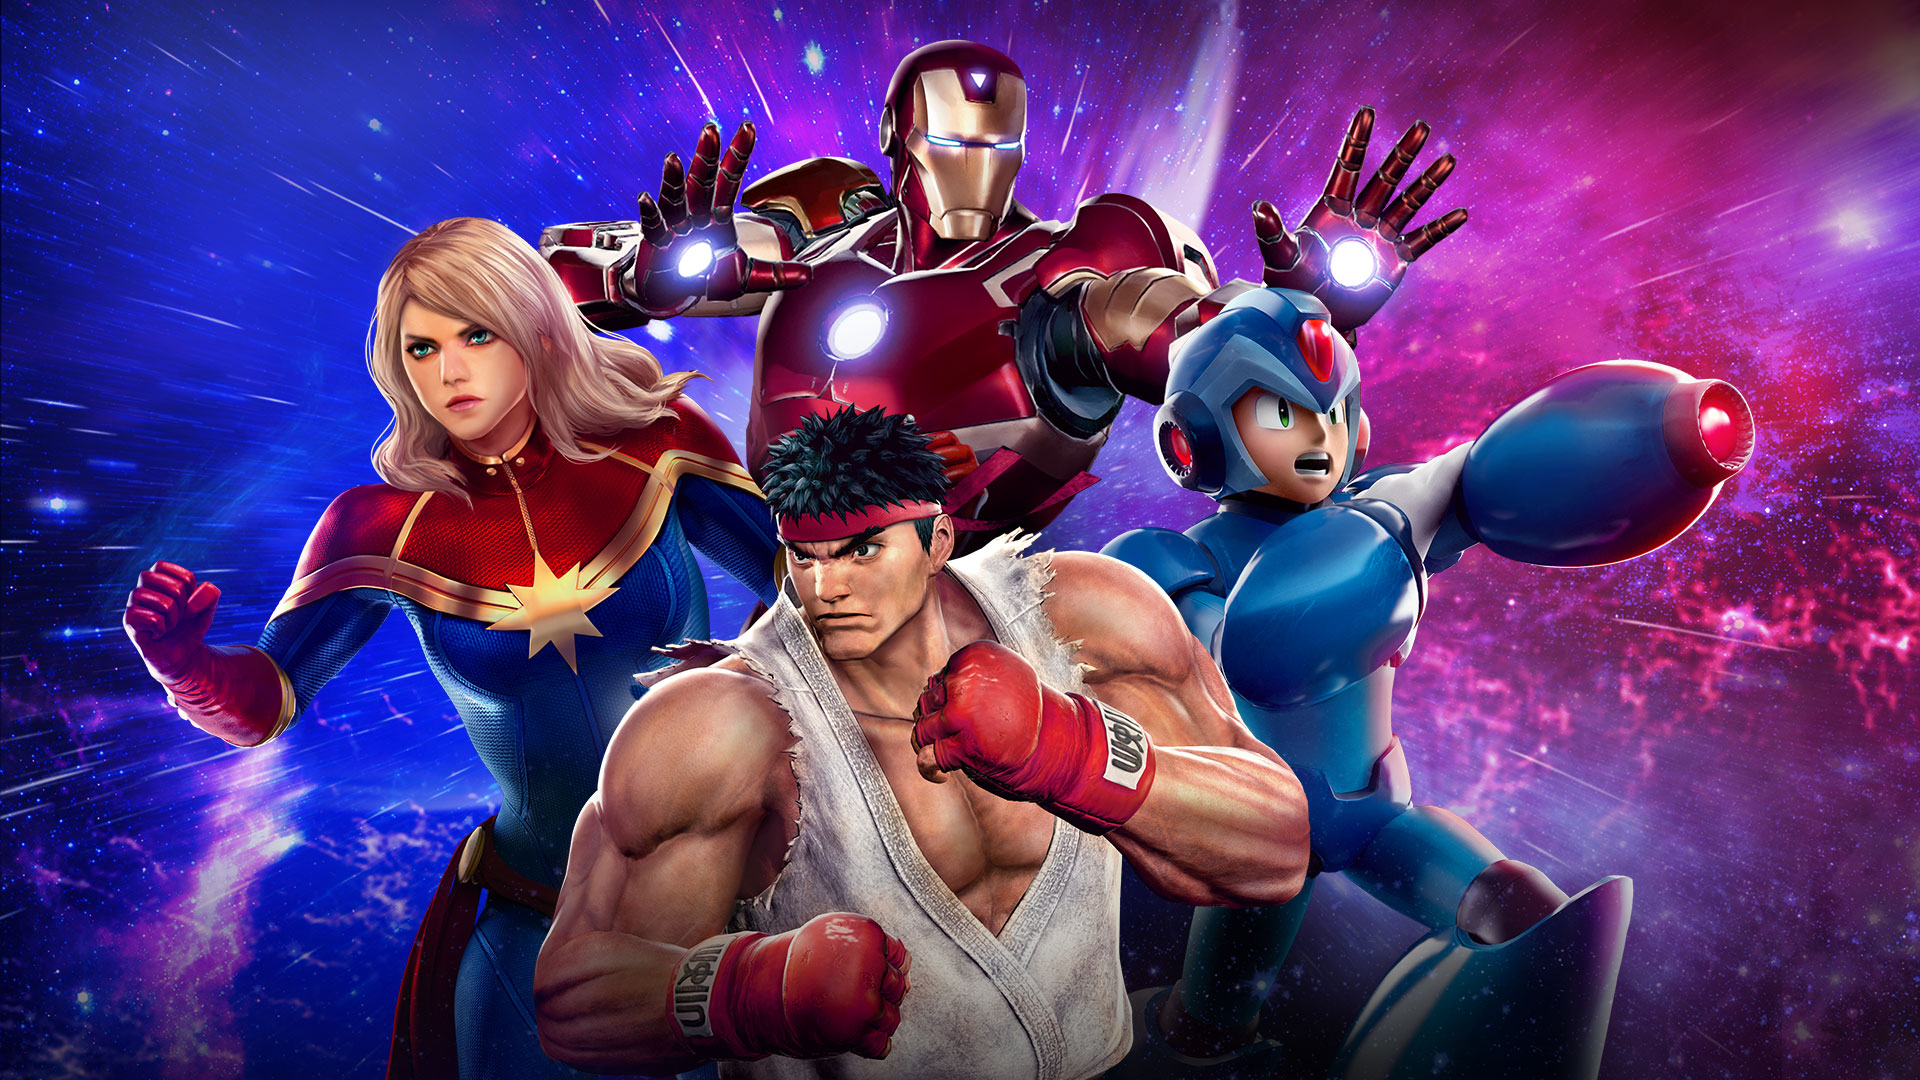 Marvel Vs Capcom: Infiniti gratis este fin de semana